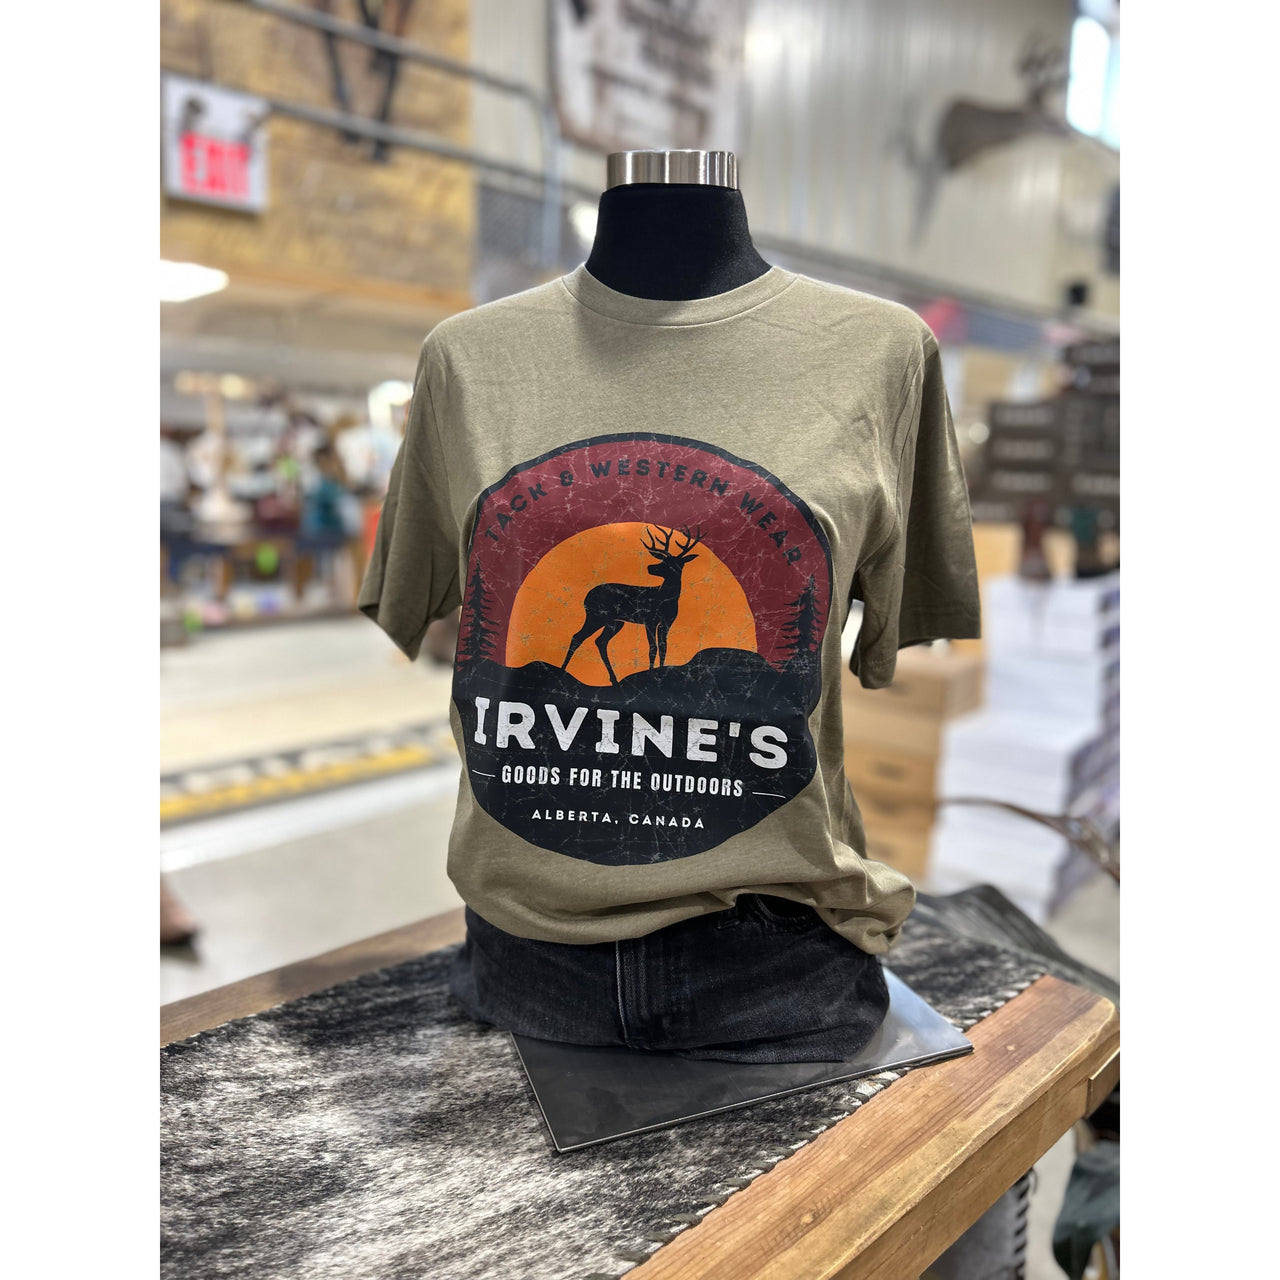 Irvine Unisex Short Sleeve "Goods for the Outdoors" T-Shirt - Heather Olive